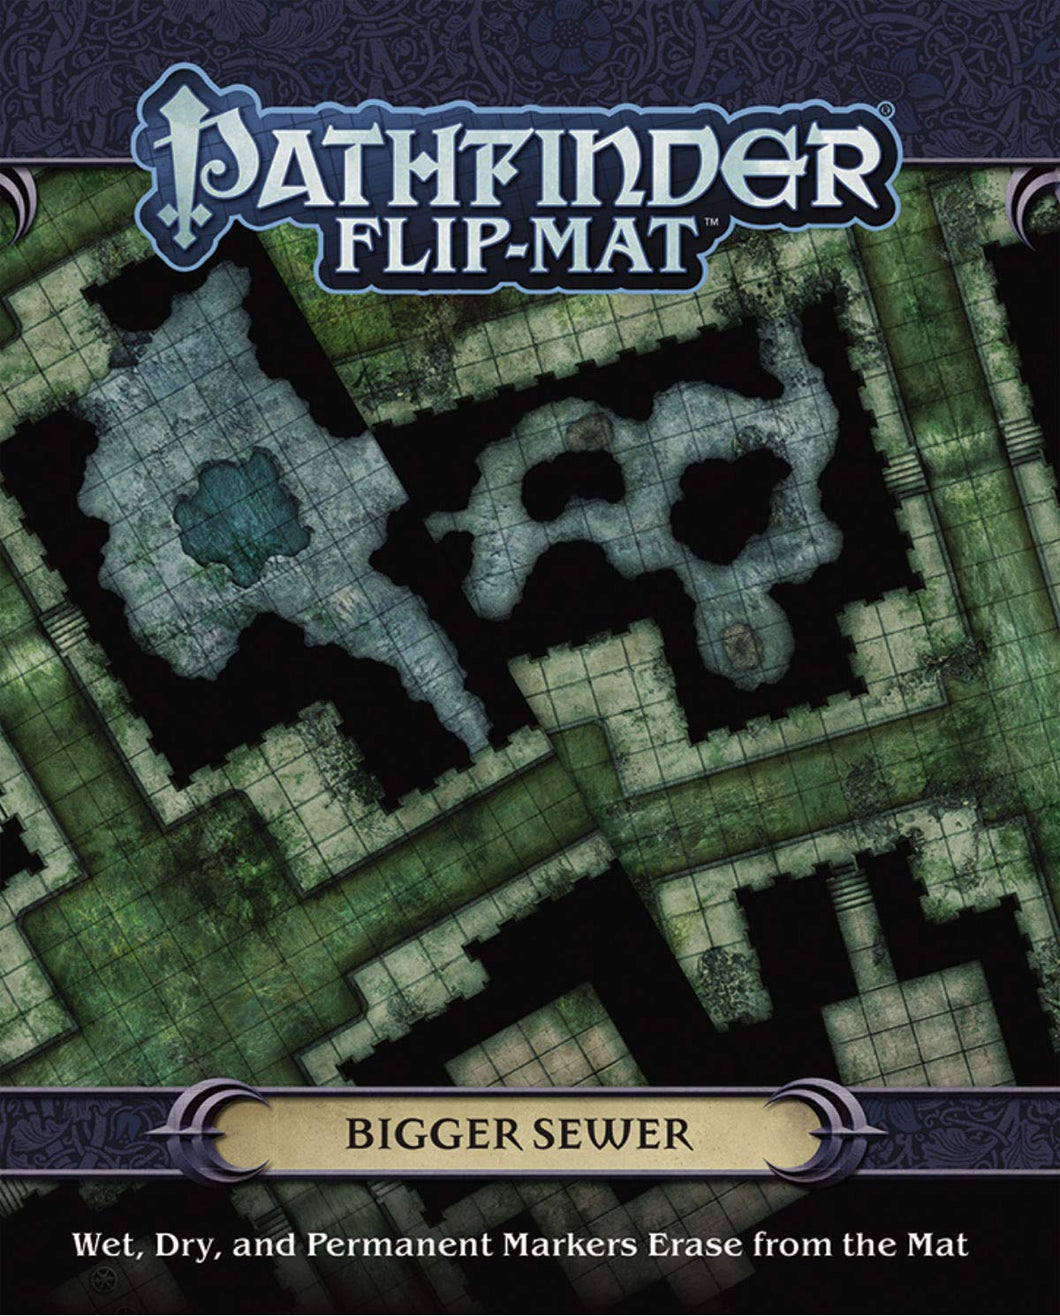 PATHFINDER FLIP-MAT: BIGGER SEWER